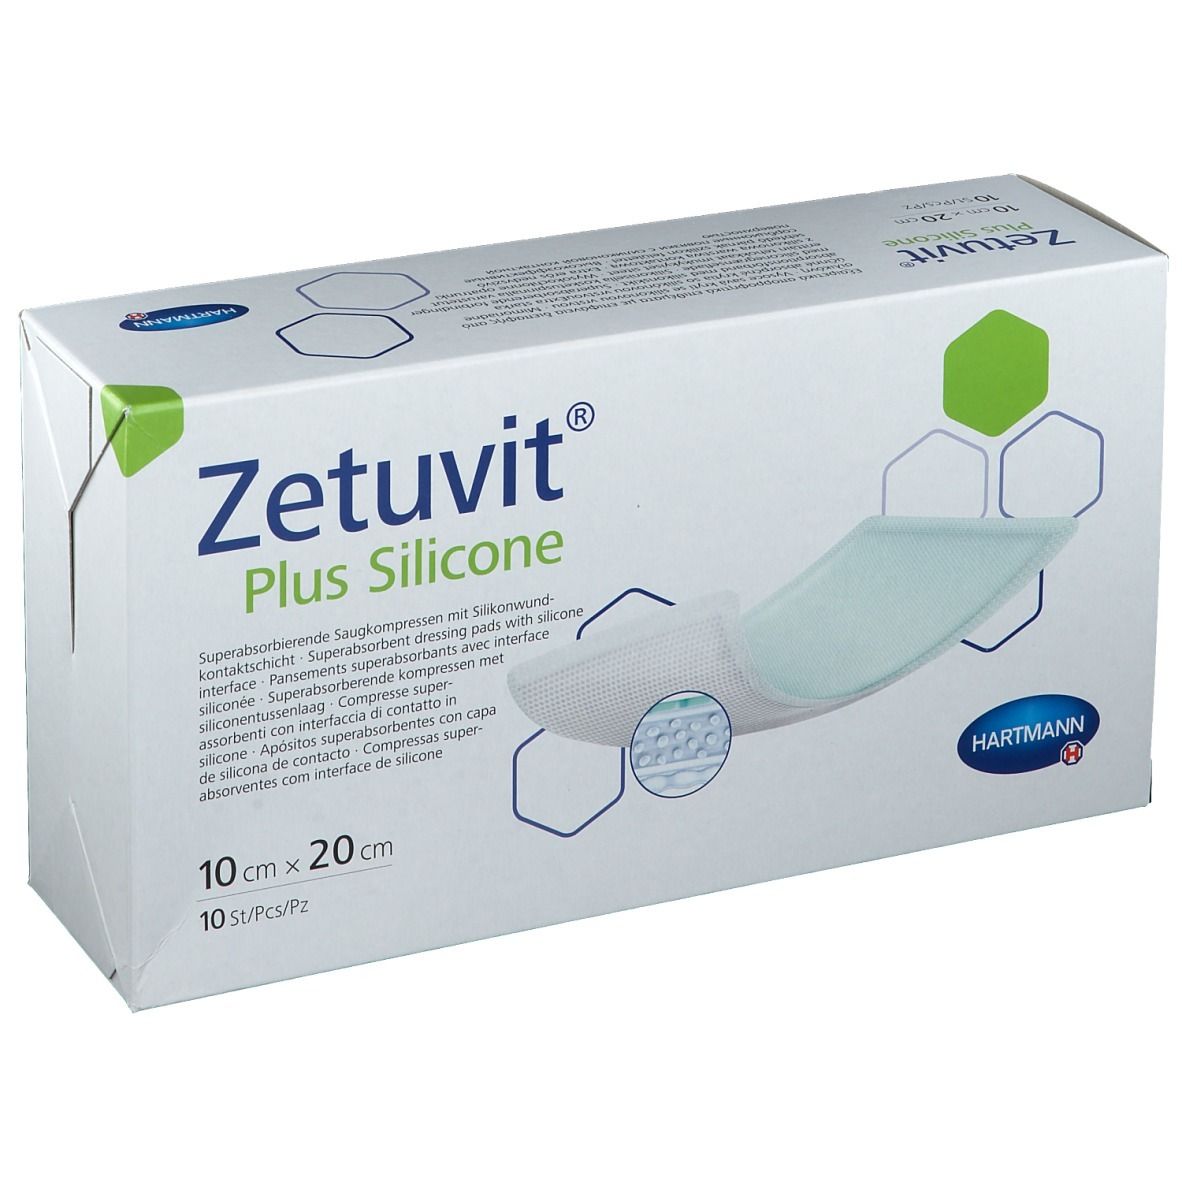 Zetuvit® Plus Silicone steril 10 cm x 20 cm